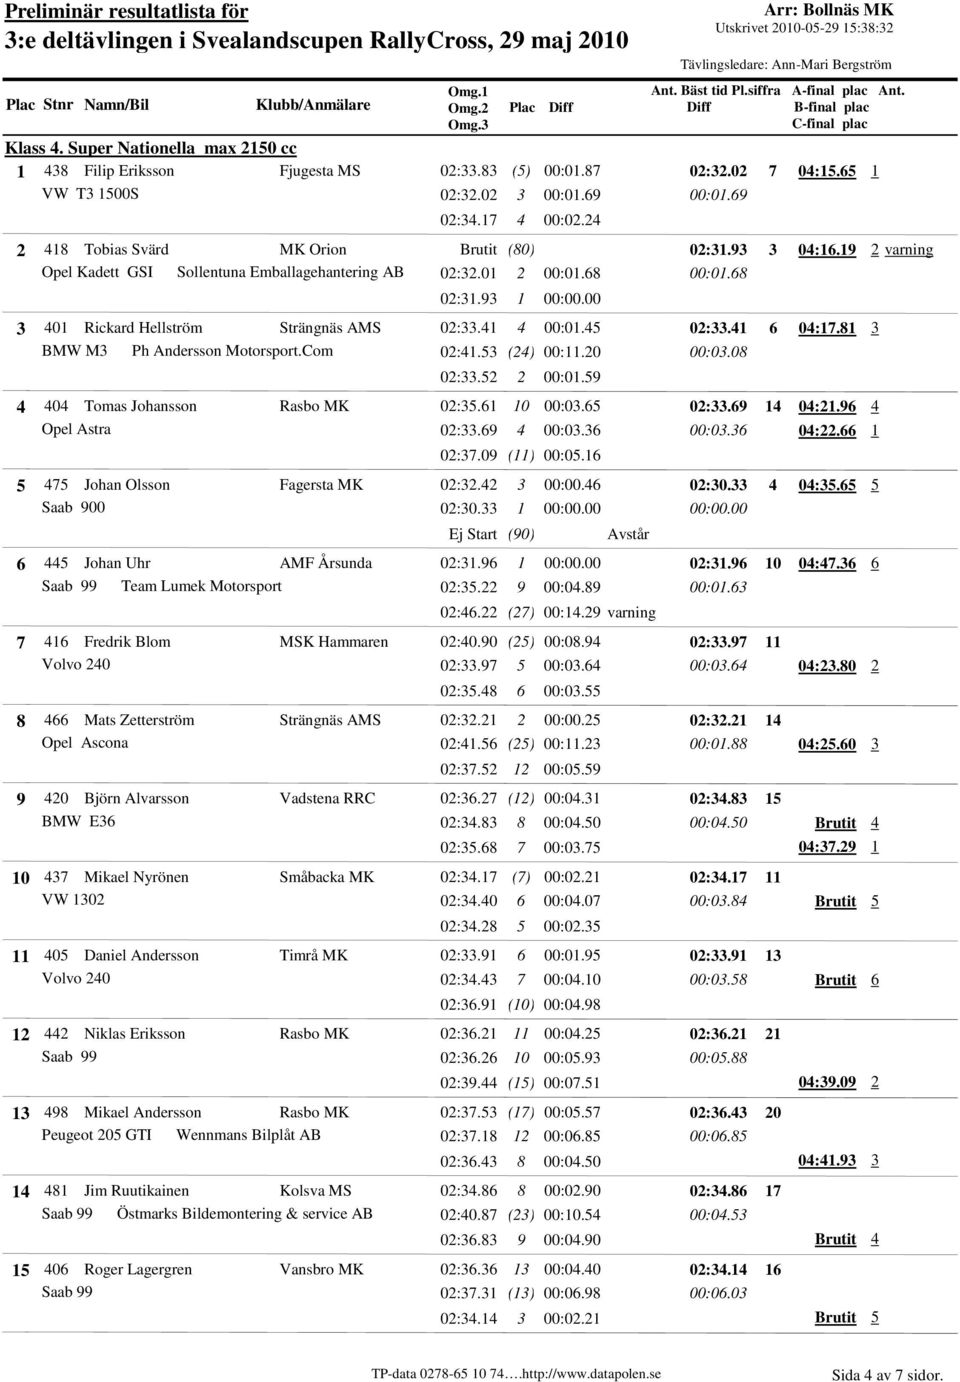 08 02:33.52 2 00:0.59 0 Tomas Johansson Rasbo MK 02:35. 0 00:03.5 02:33.9 Opel Astra 02:33.9 00:03.3 00:03.3 02:37.09 () 00:05. 5 75 Johan Olsson Fagersta MK 02:32.2 3 00:00. 02:30.33 02:30.